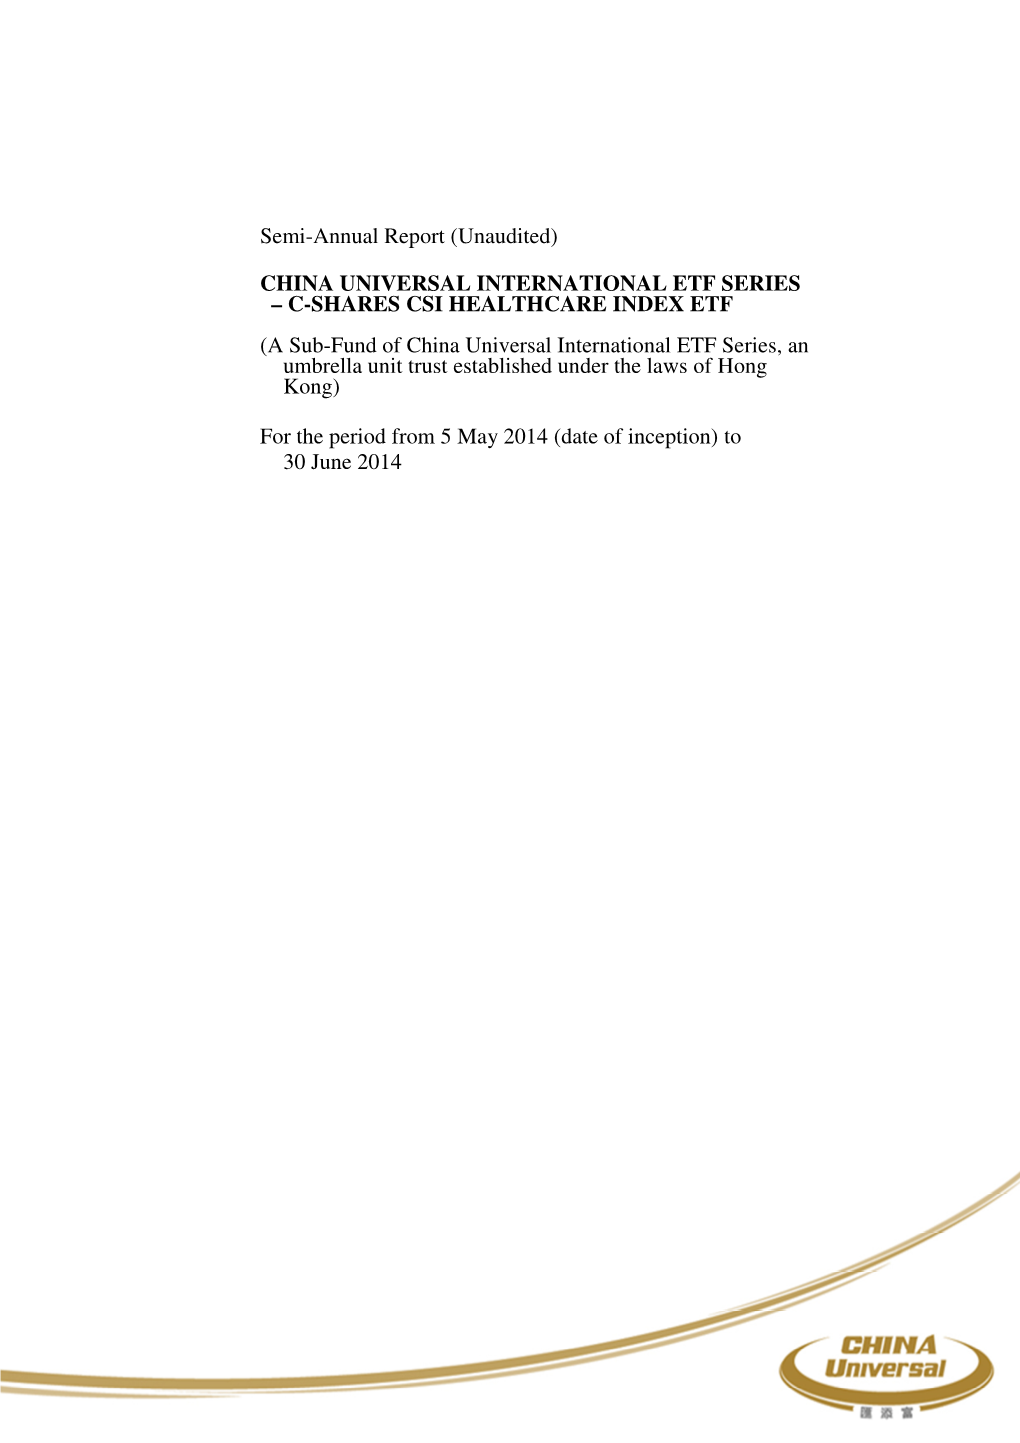 China Universal International Etf Series – C-Shares Csi Healthcare Index Etf